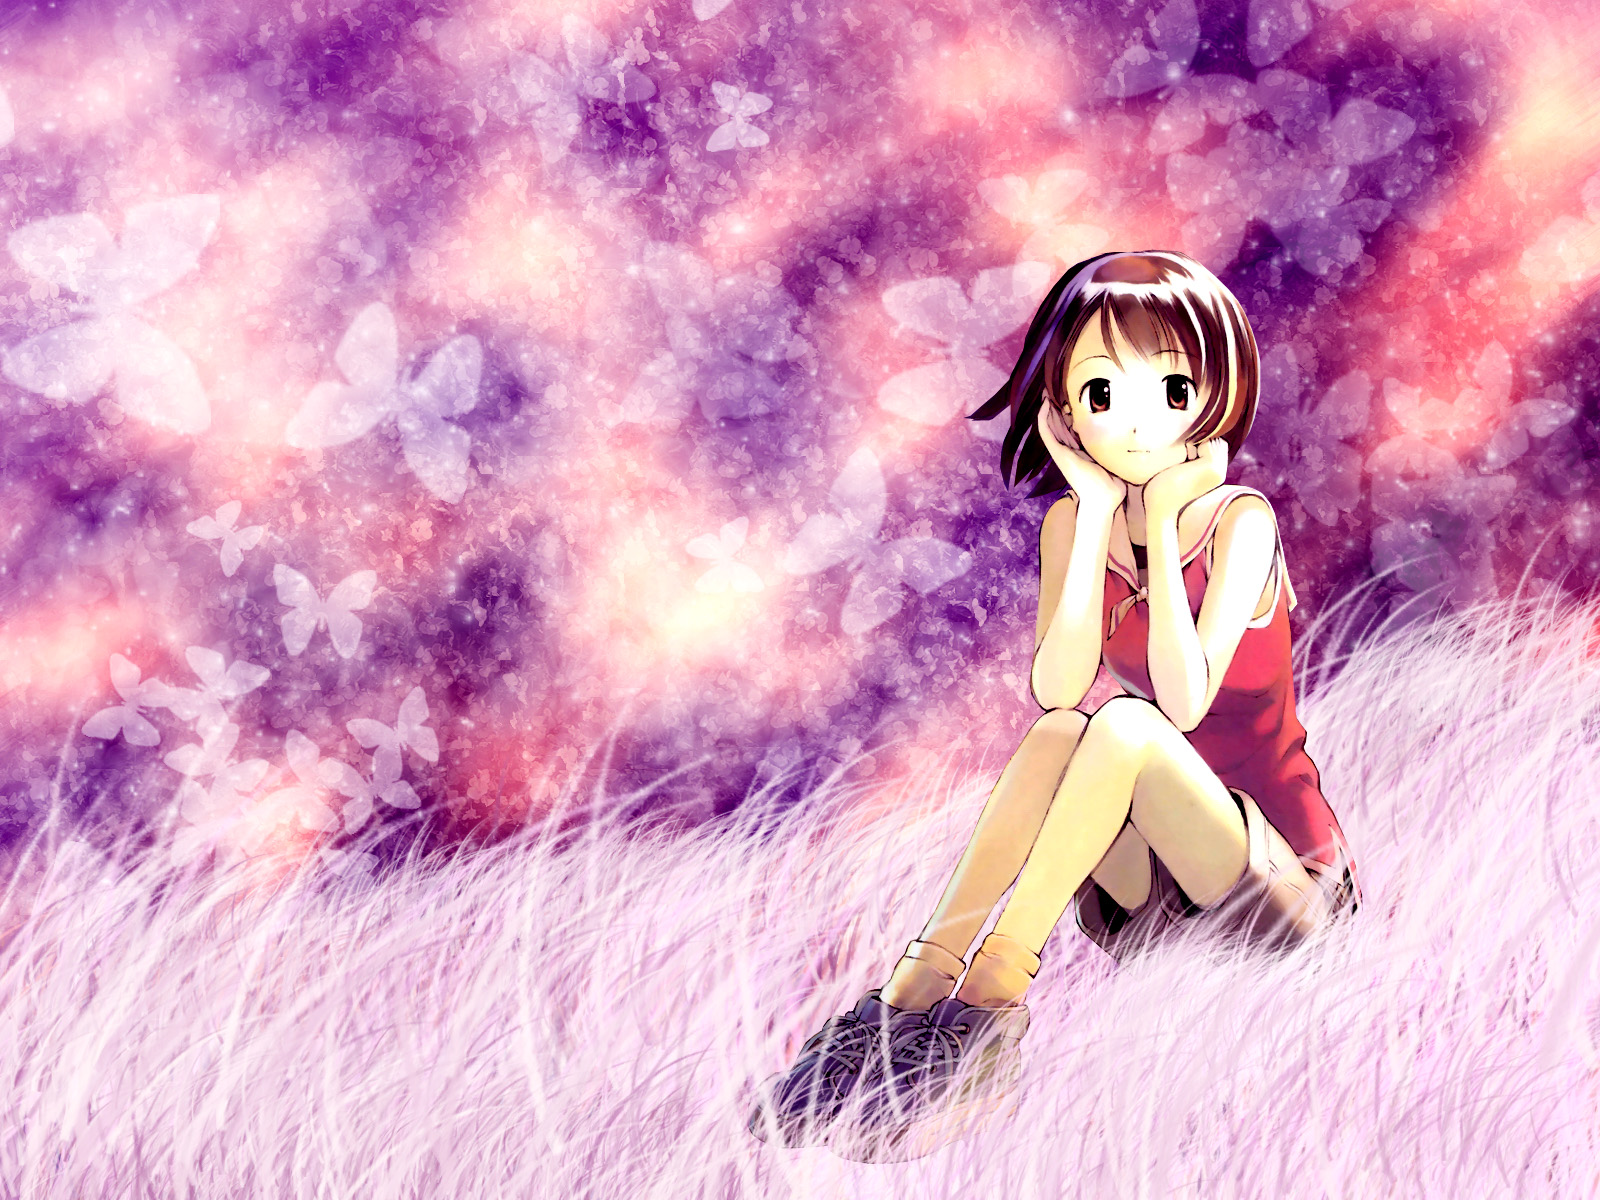 page size 1600x1200 desktop wallpaper of cute anime girl 1600x1200